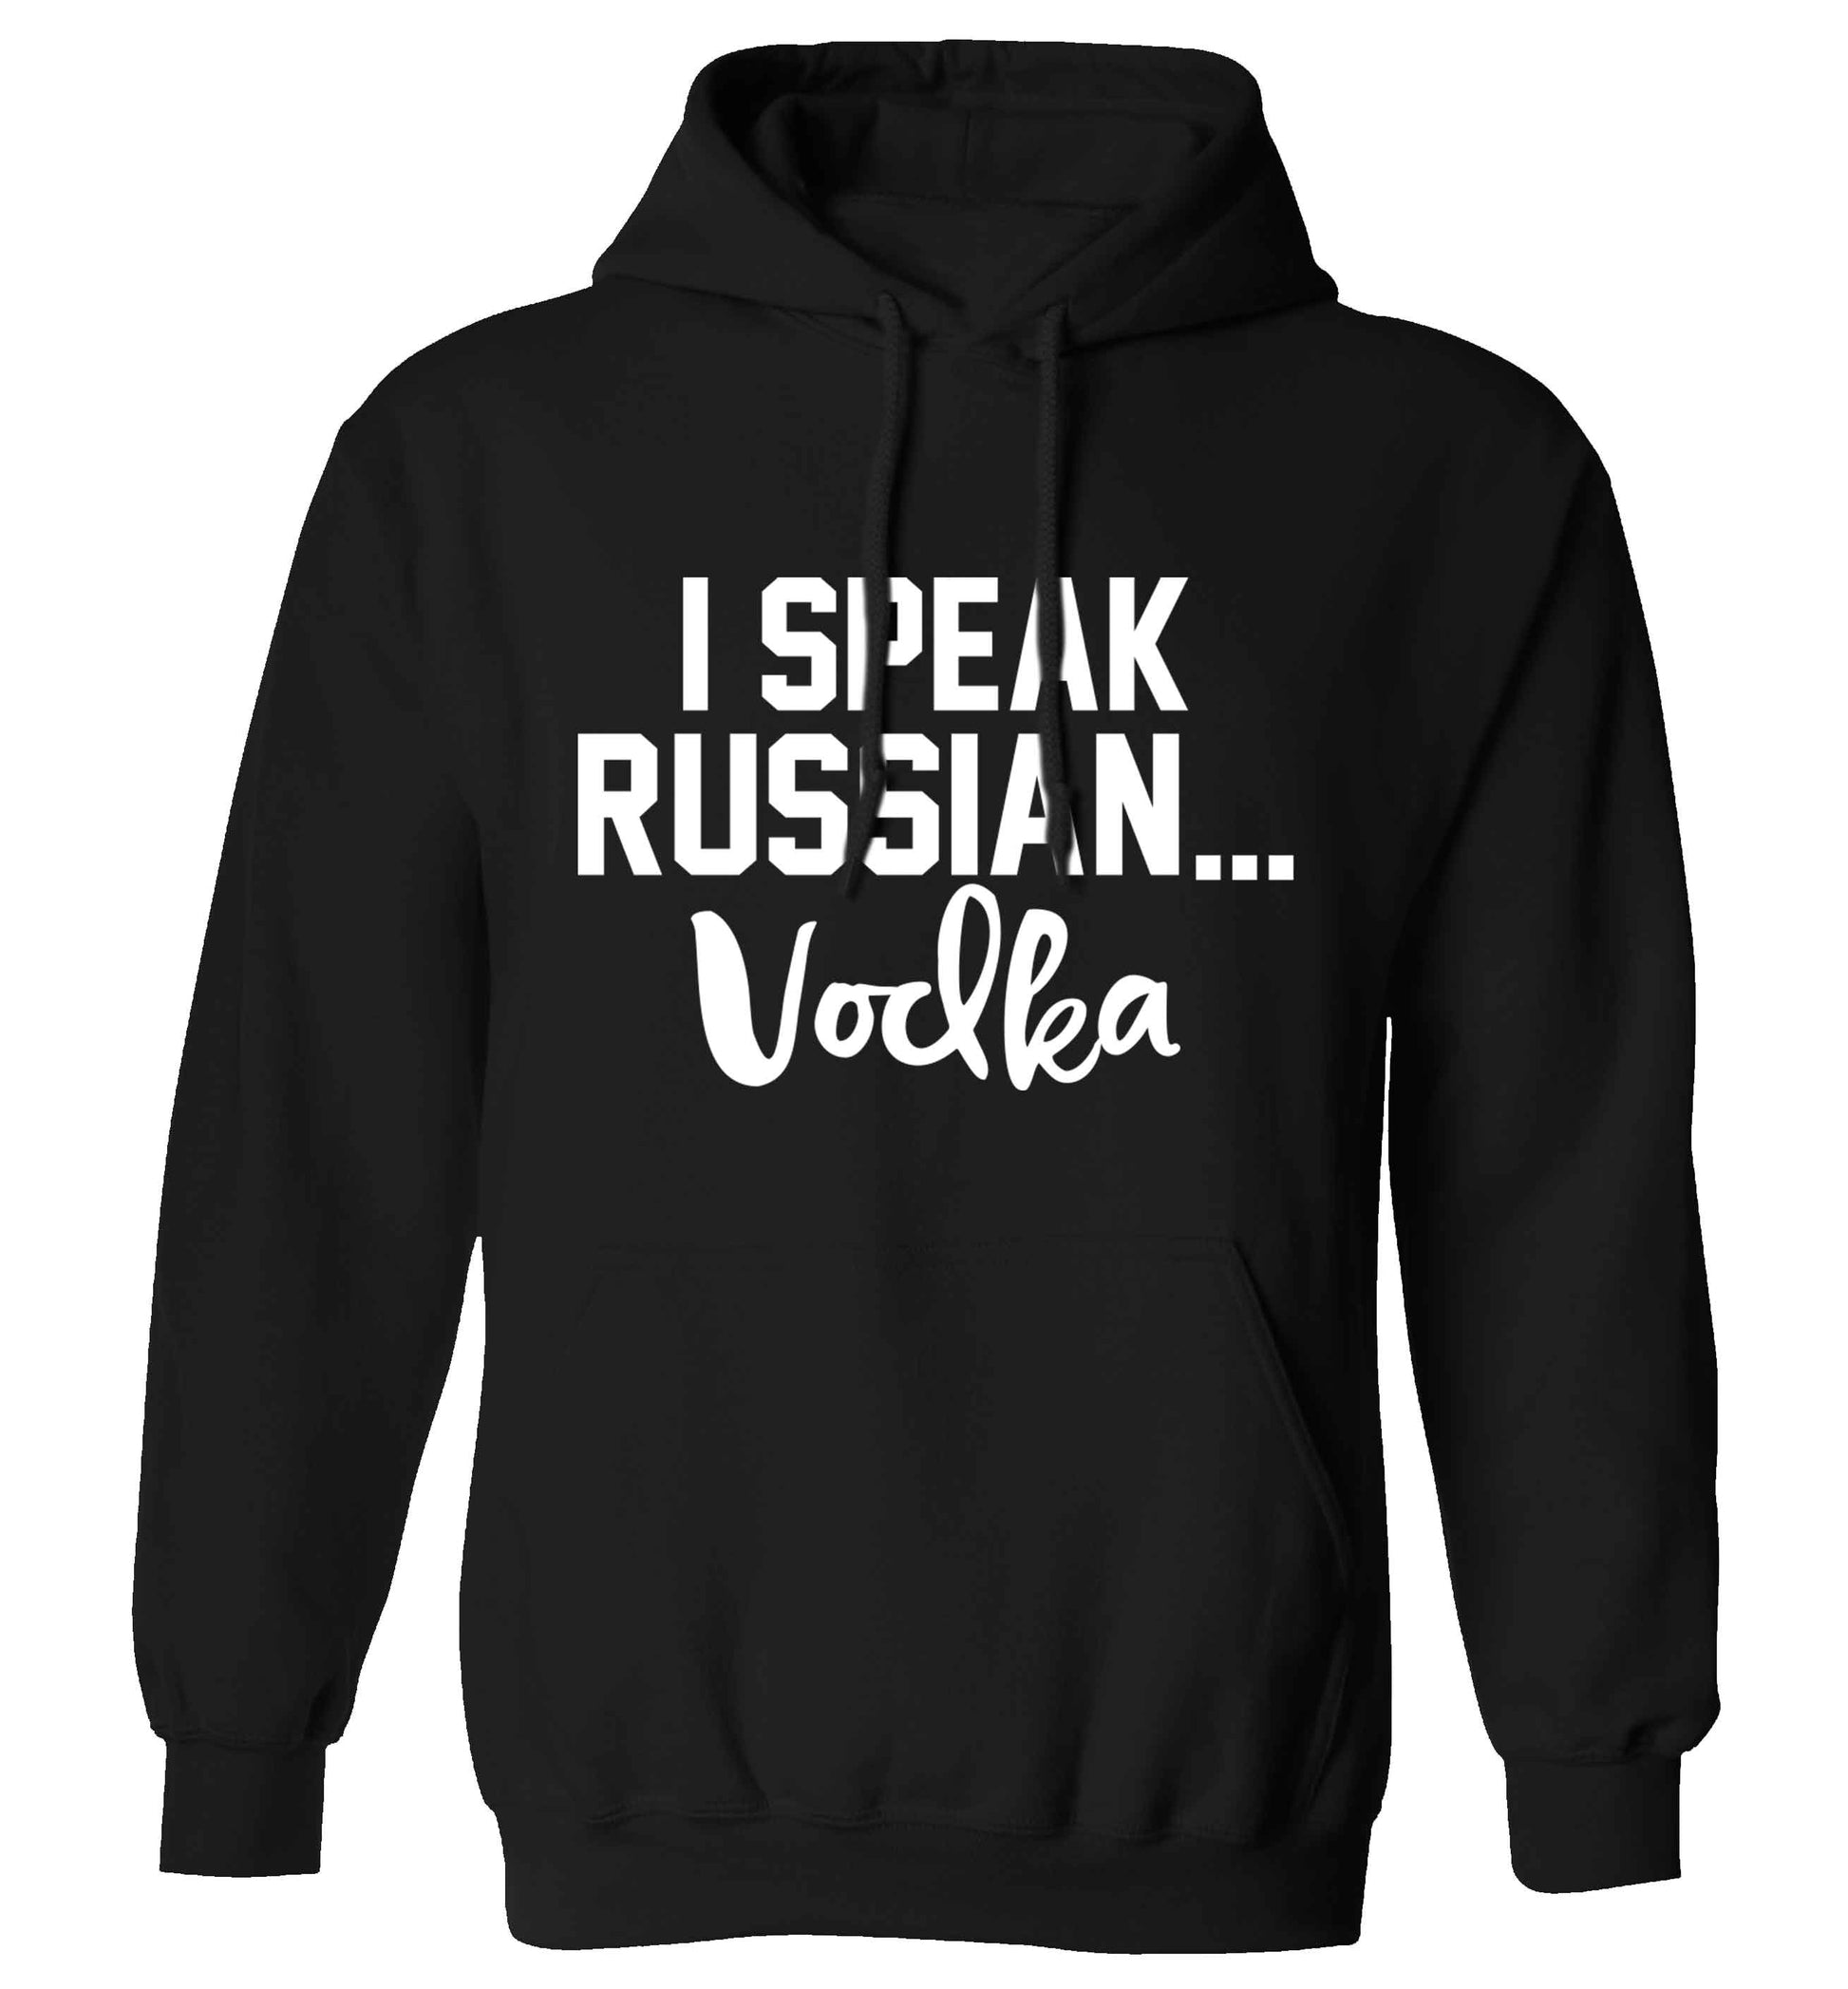 I speak russian...vodka adults unisex black hoodie 2XL